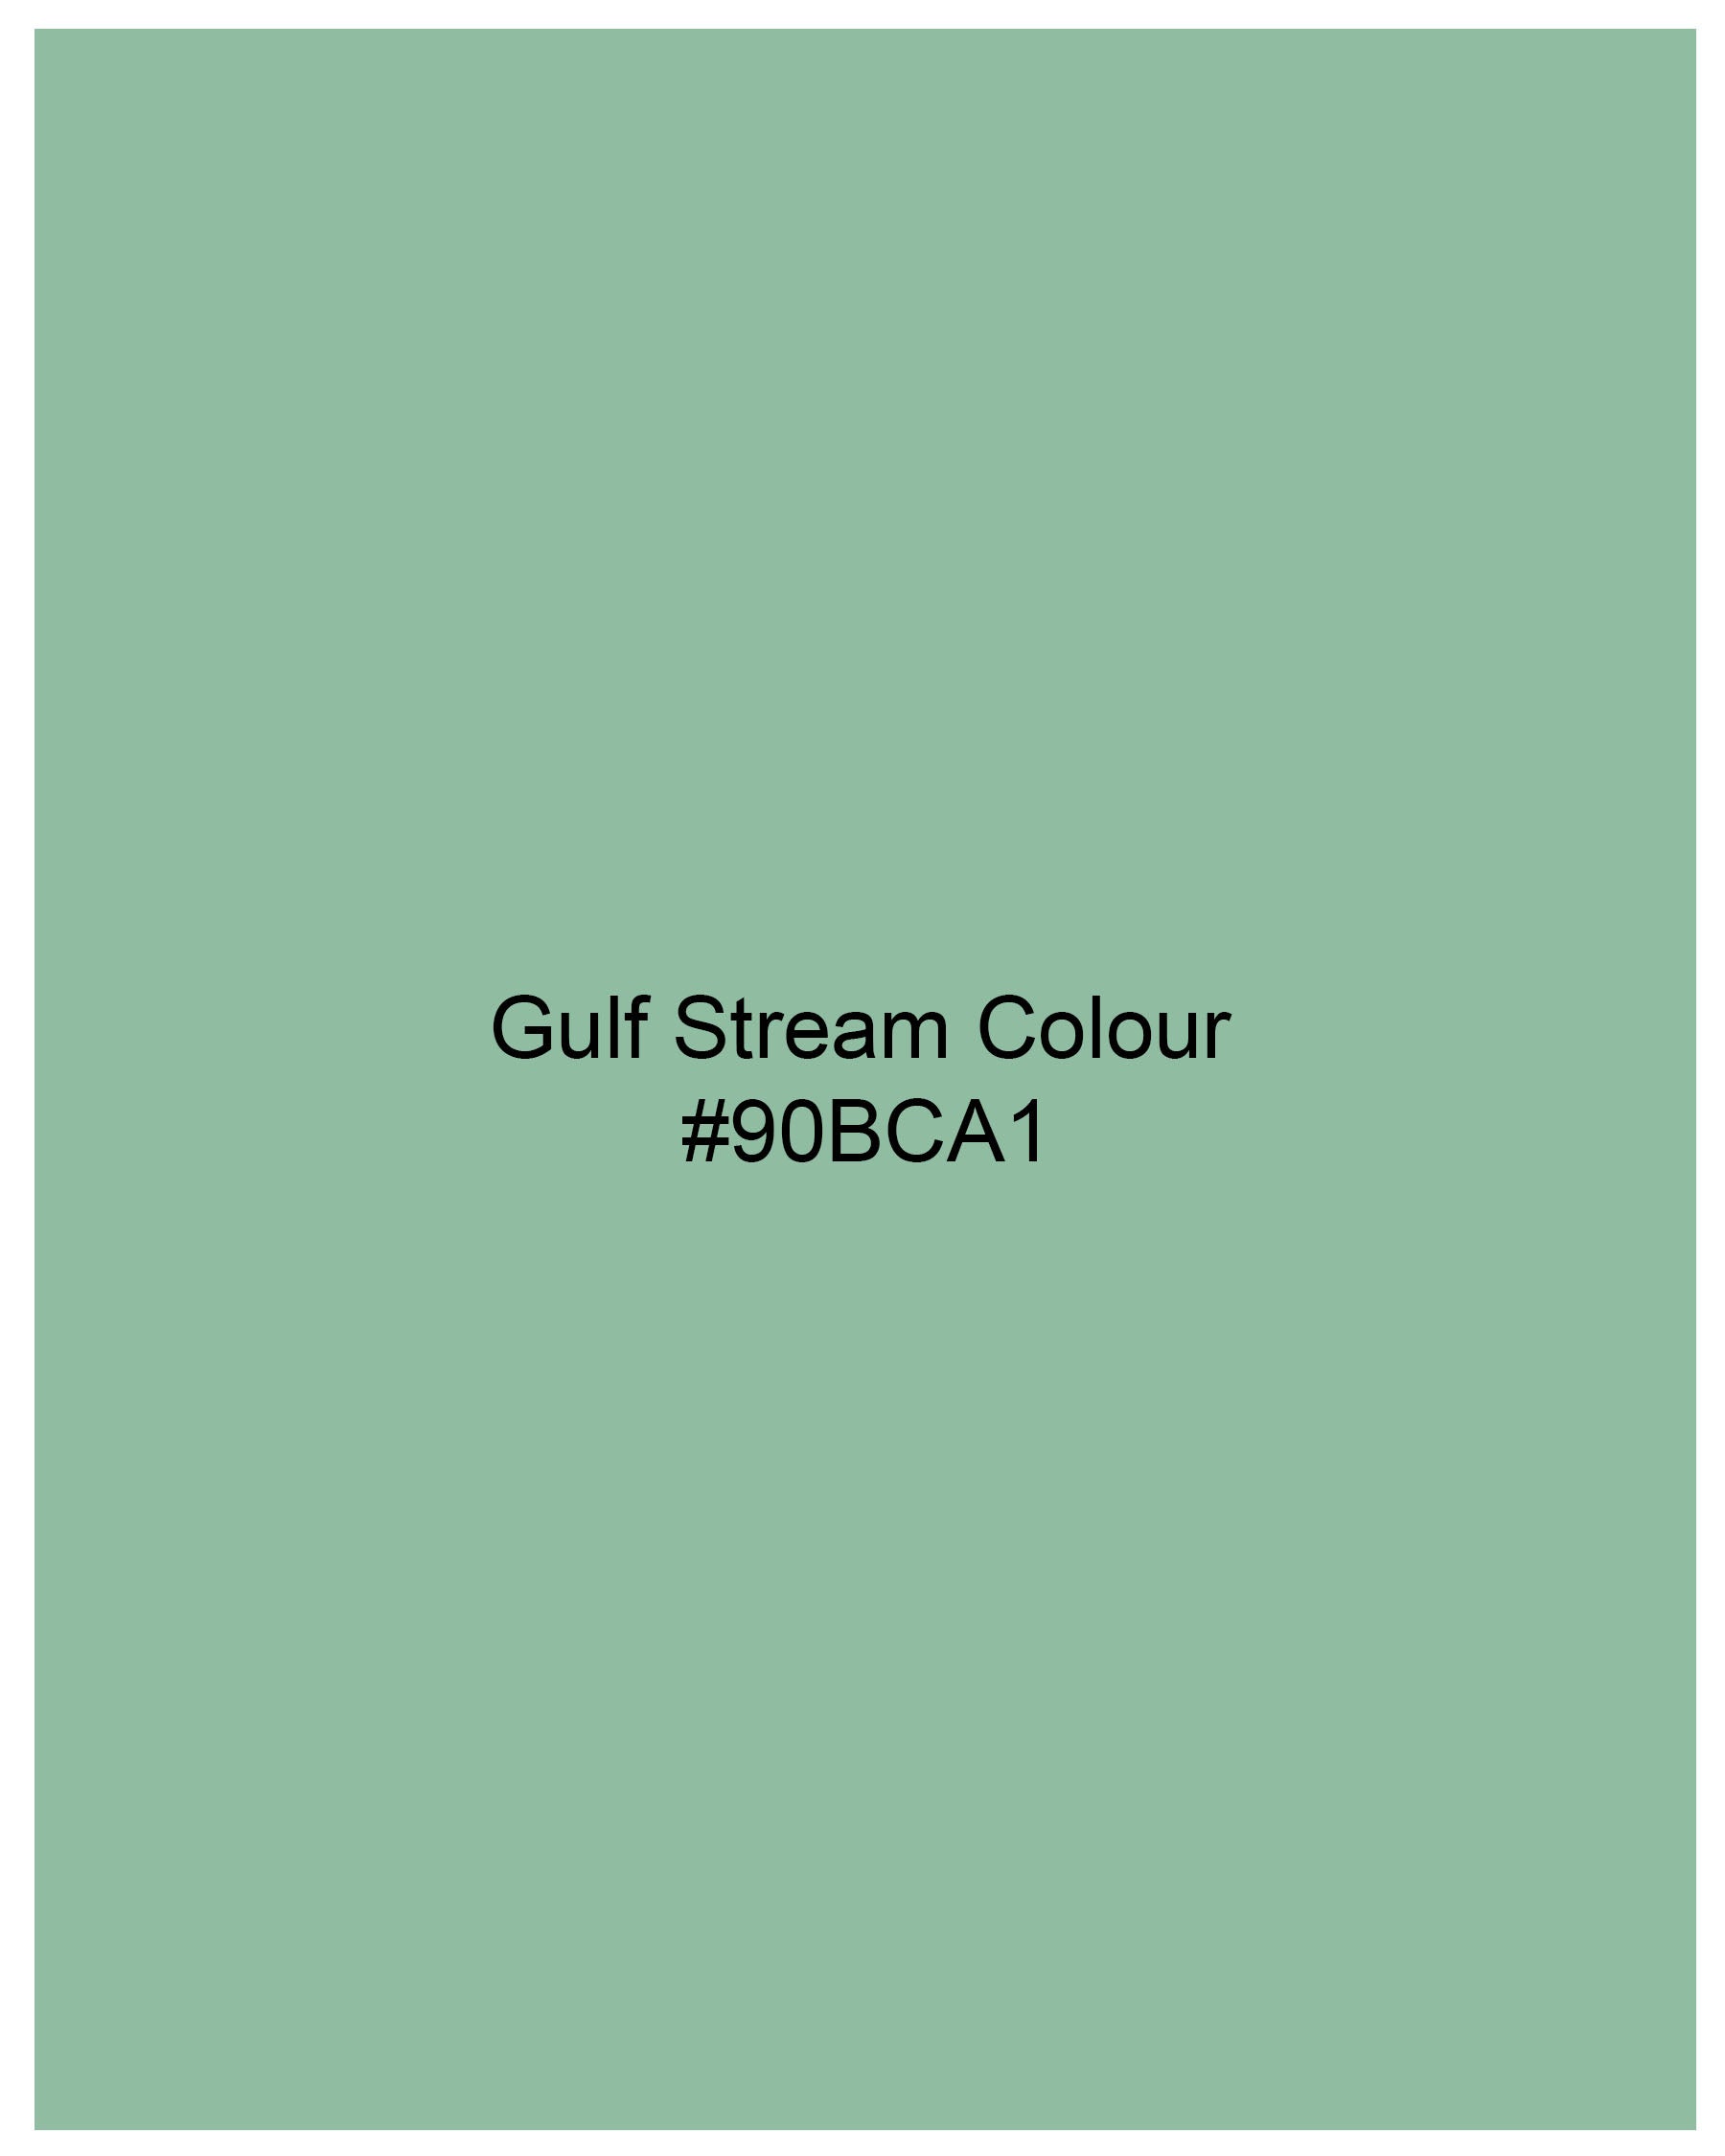 Gulf Stream Green Royal Oxford Shirt 8178-CA-38, 8178-CA-H-38, 8178-CA-39, 8178-CA-H-39, 8178-CA-40, 8178-CA-H-40, 8178-CA-42, 8178-CA-H-42, 8178-CA-44, 8178-CA-H-44, 8178-CA-46, 8178-CA-H-46, 8178-CA-48, 8178-CA-H-48, 8178-CA-50, 8178-CA-H-50, 8178-CA-52, 8178-CA-H-52